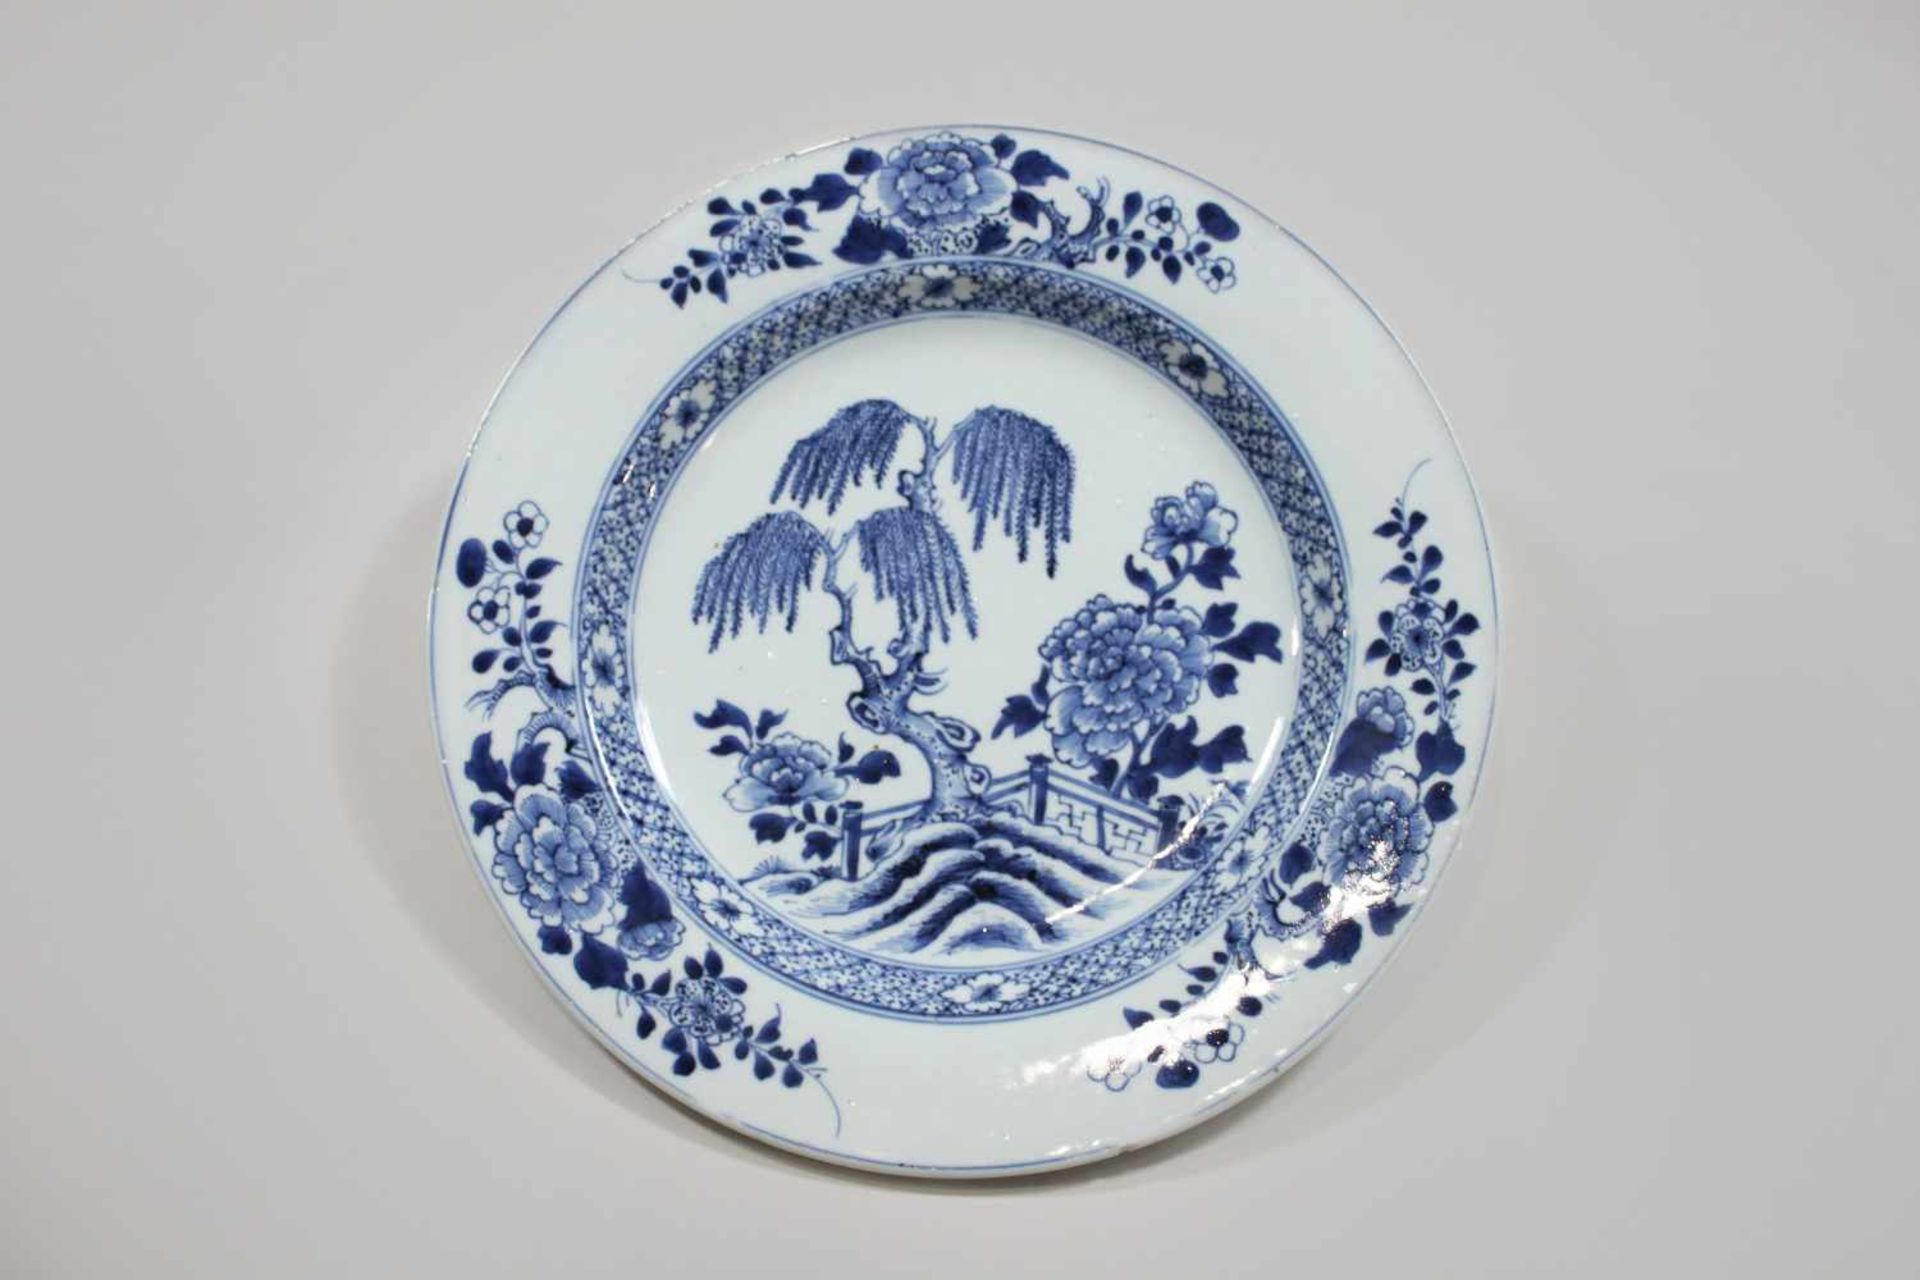 Großer Porzellanteller, China, Epoche des Kaisers Qianlong um 1740/45, blaues, florales Dekor